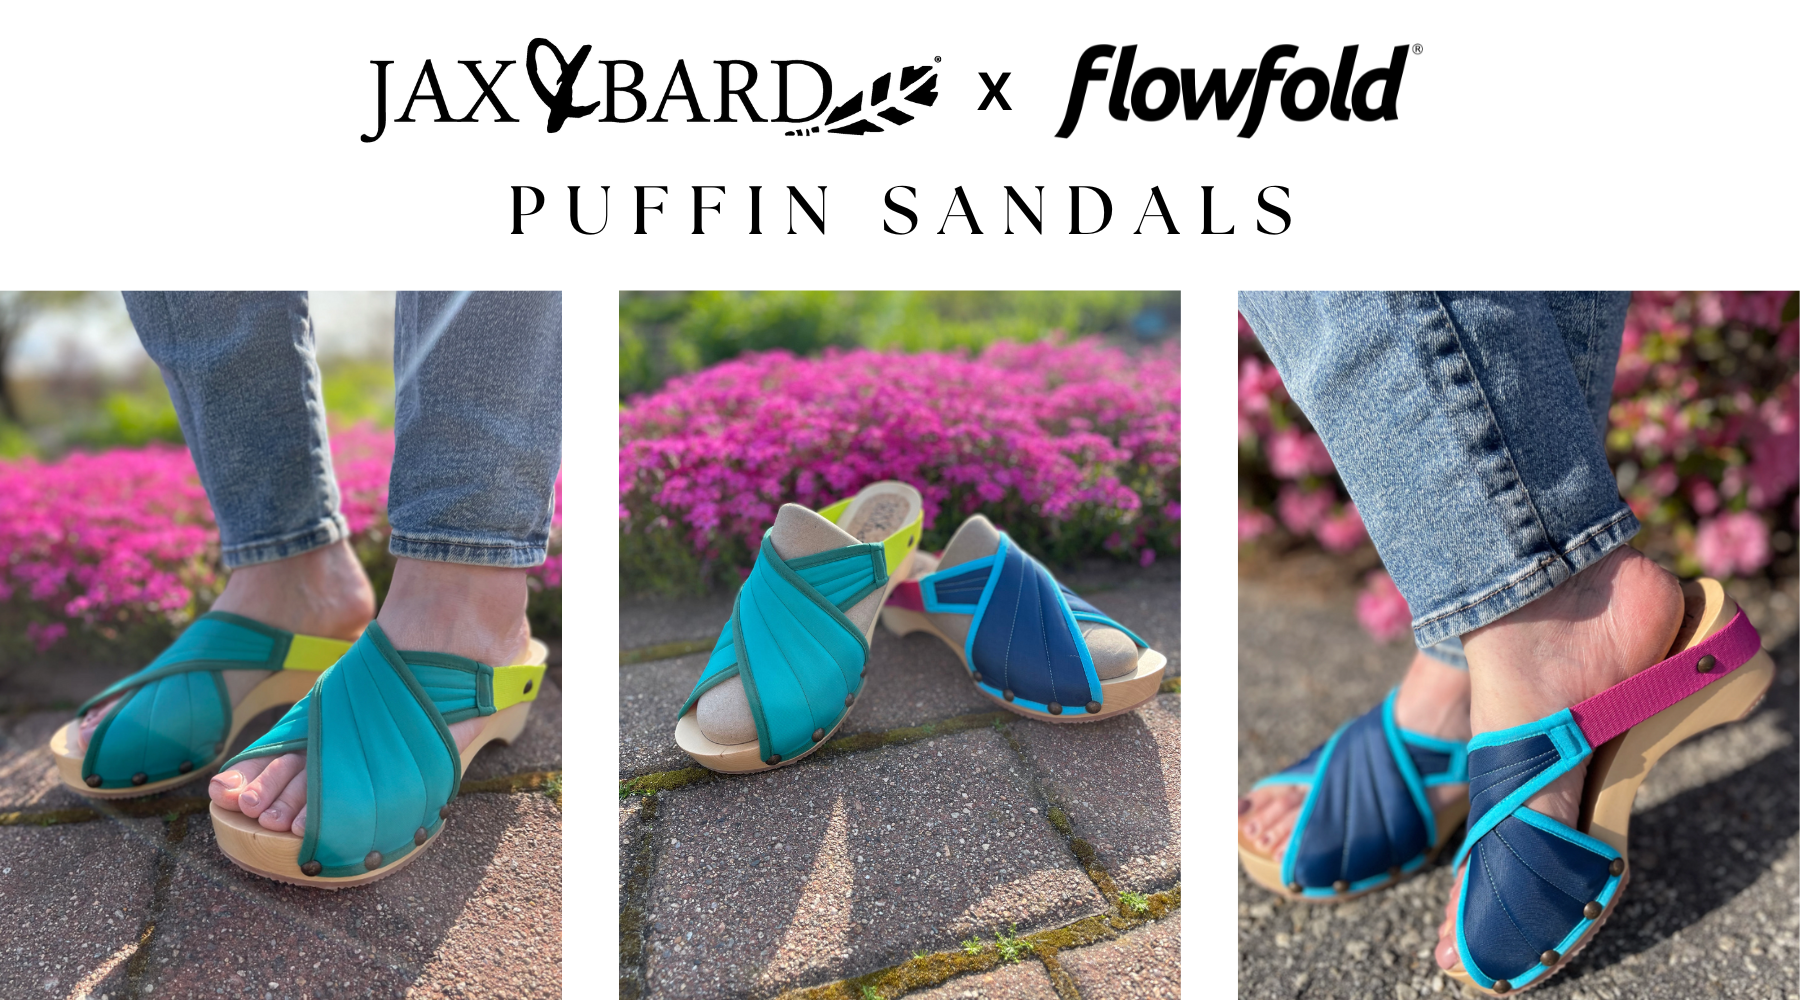 Jax-and-bard-x-flowfold-puffin-sandal-collab